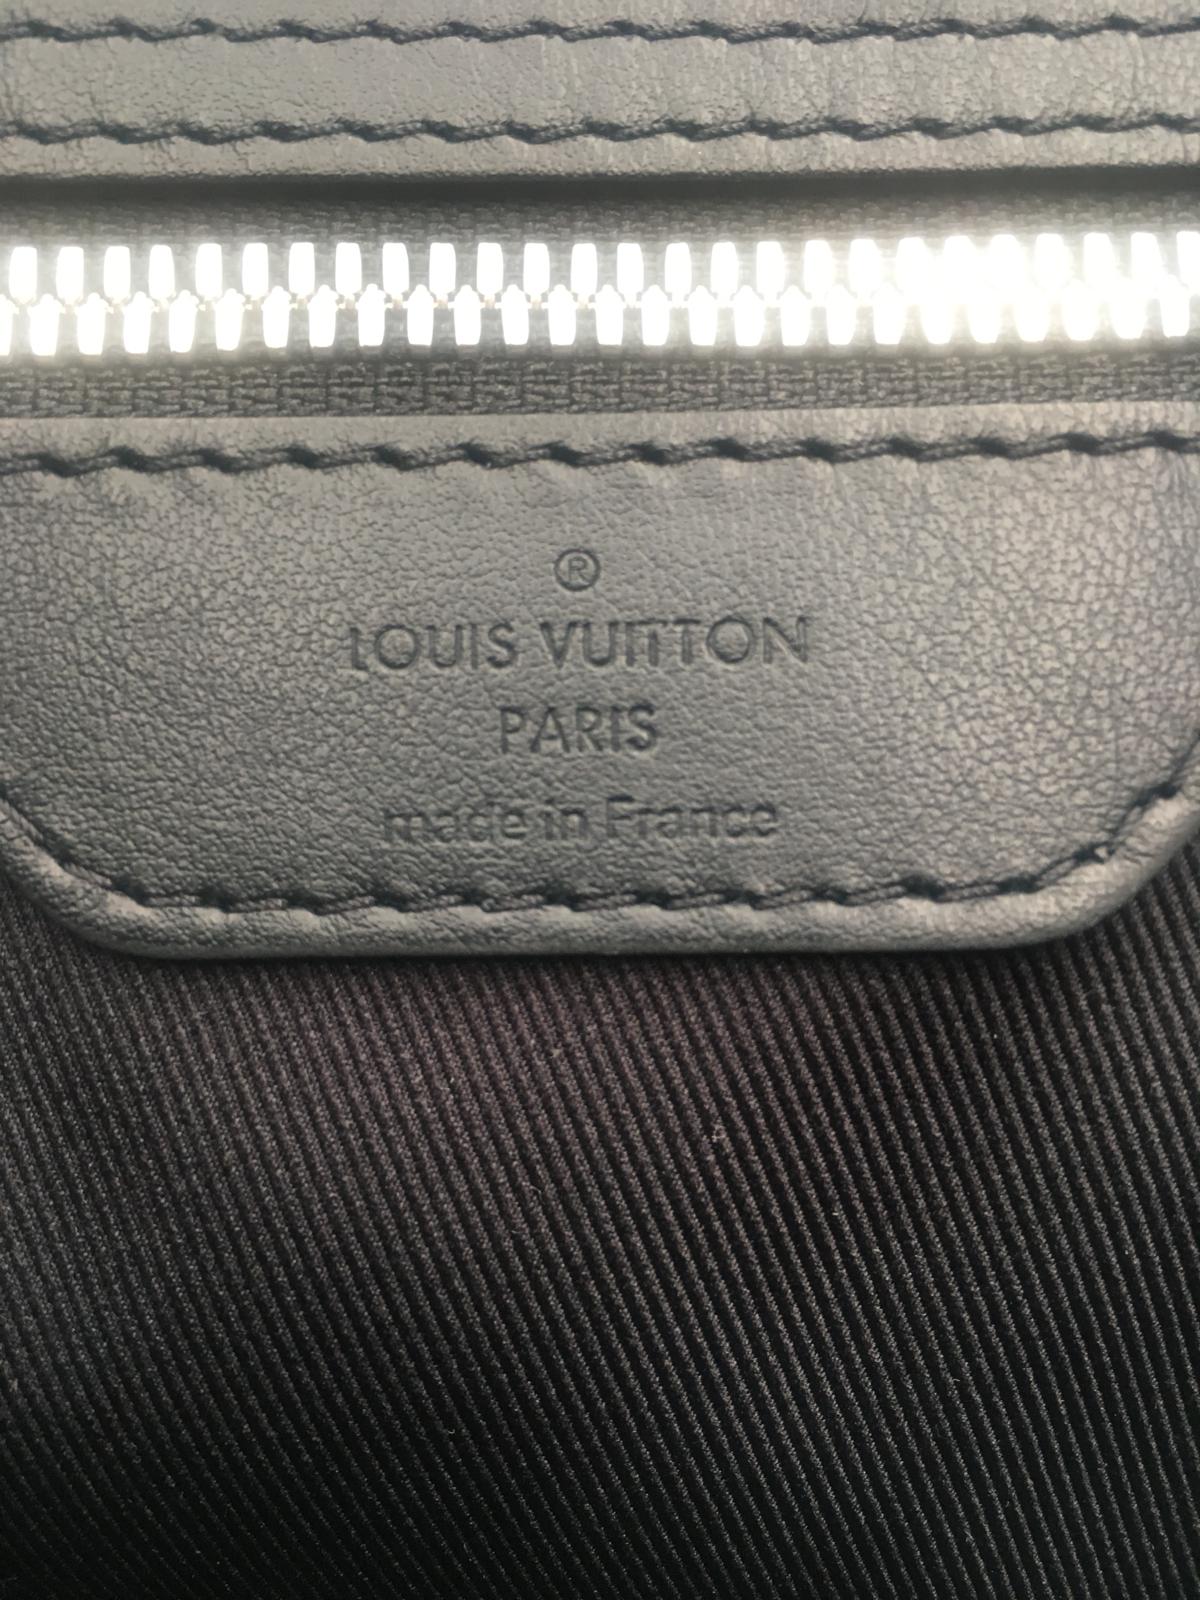 LOUIS VUITTON PARIS LV LOGO LEATHER BAG Samsung Galaxy